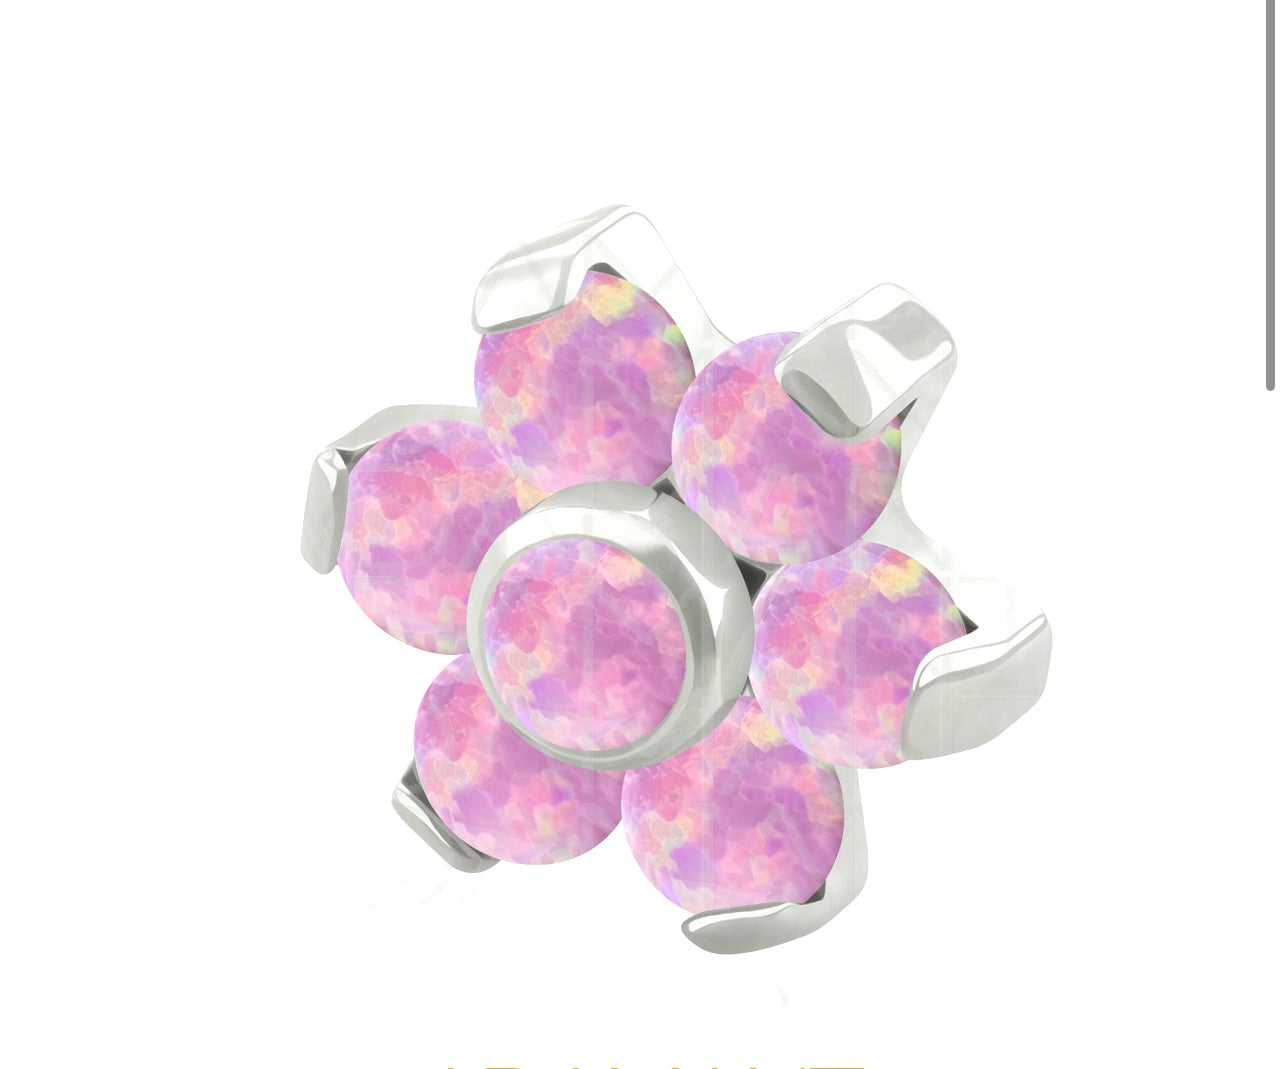 Hexaflower Opal